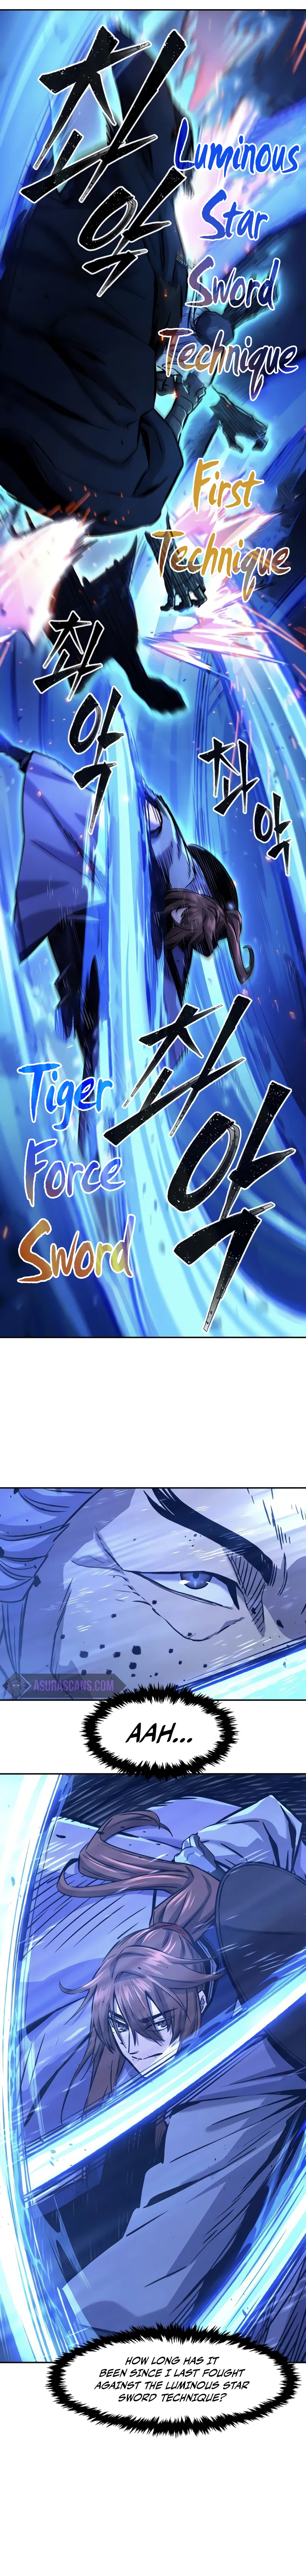 Absolute Sword Sense chapter 66